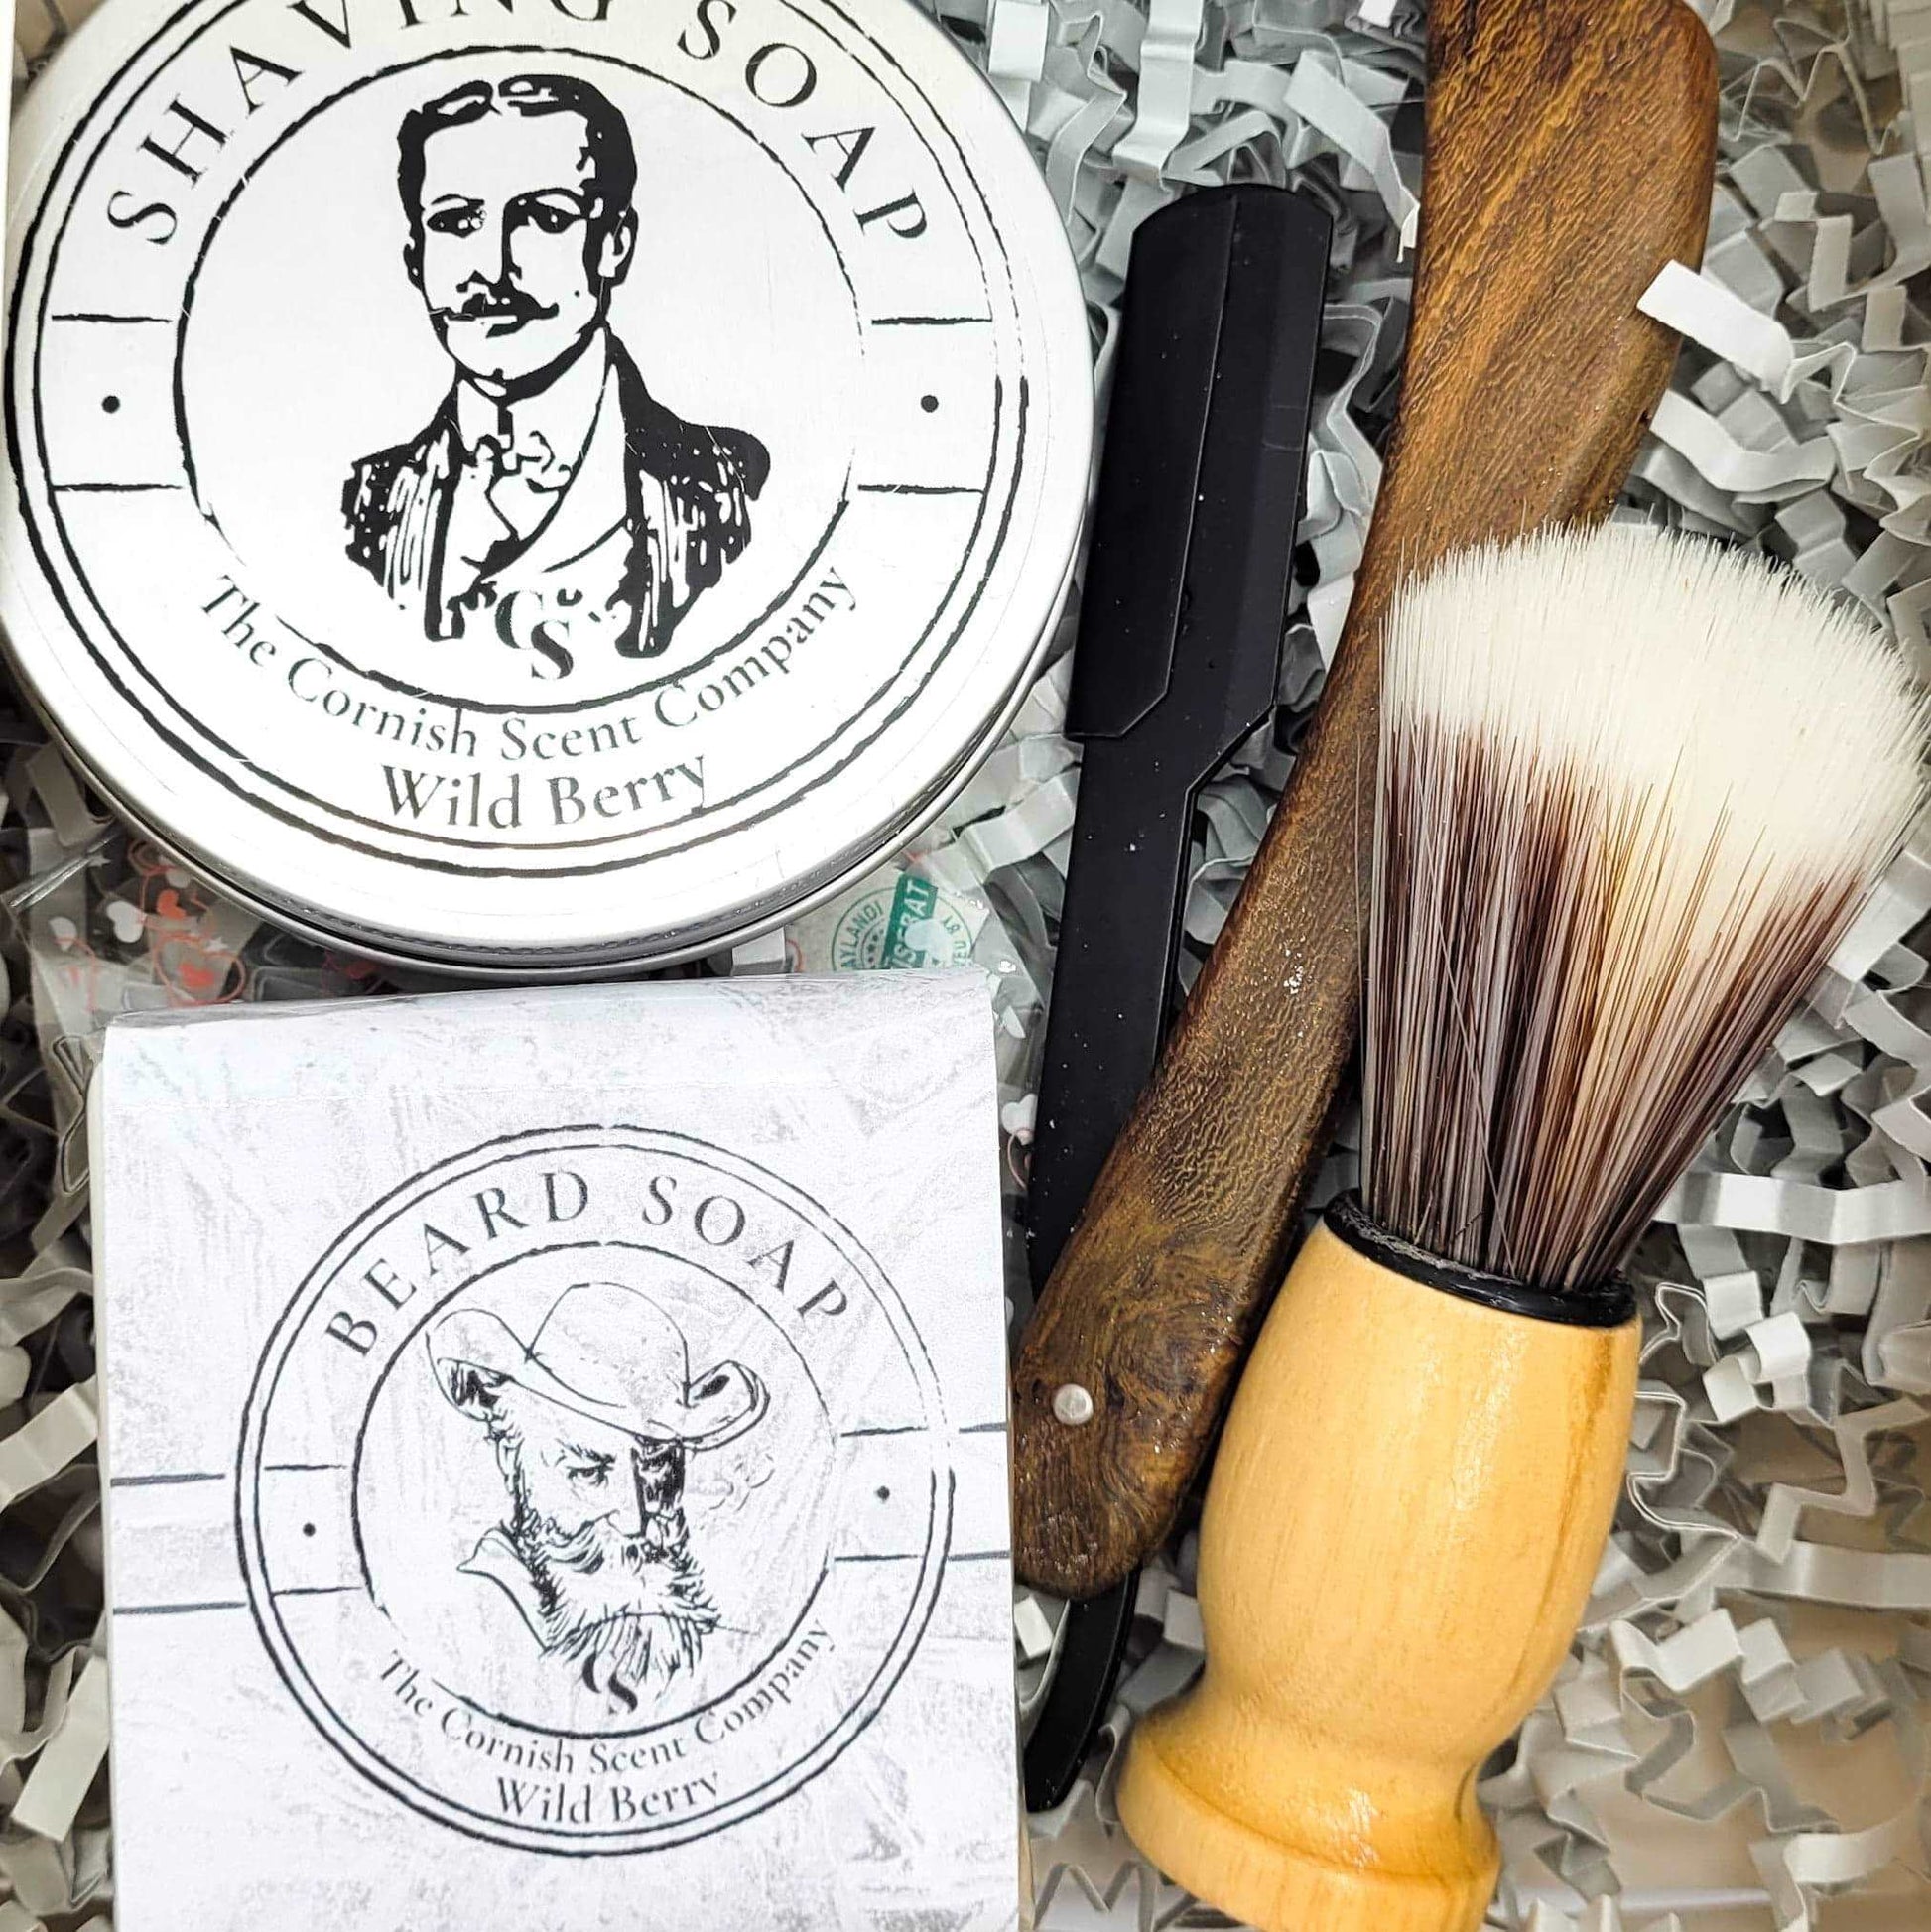 Luxury shaving / grooming kit for men - The Cornish Scent Company